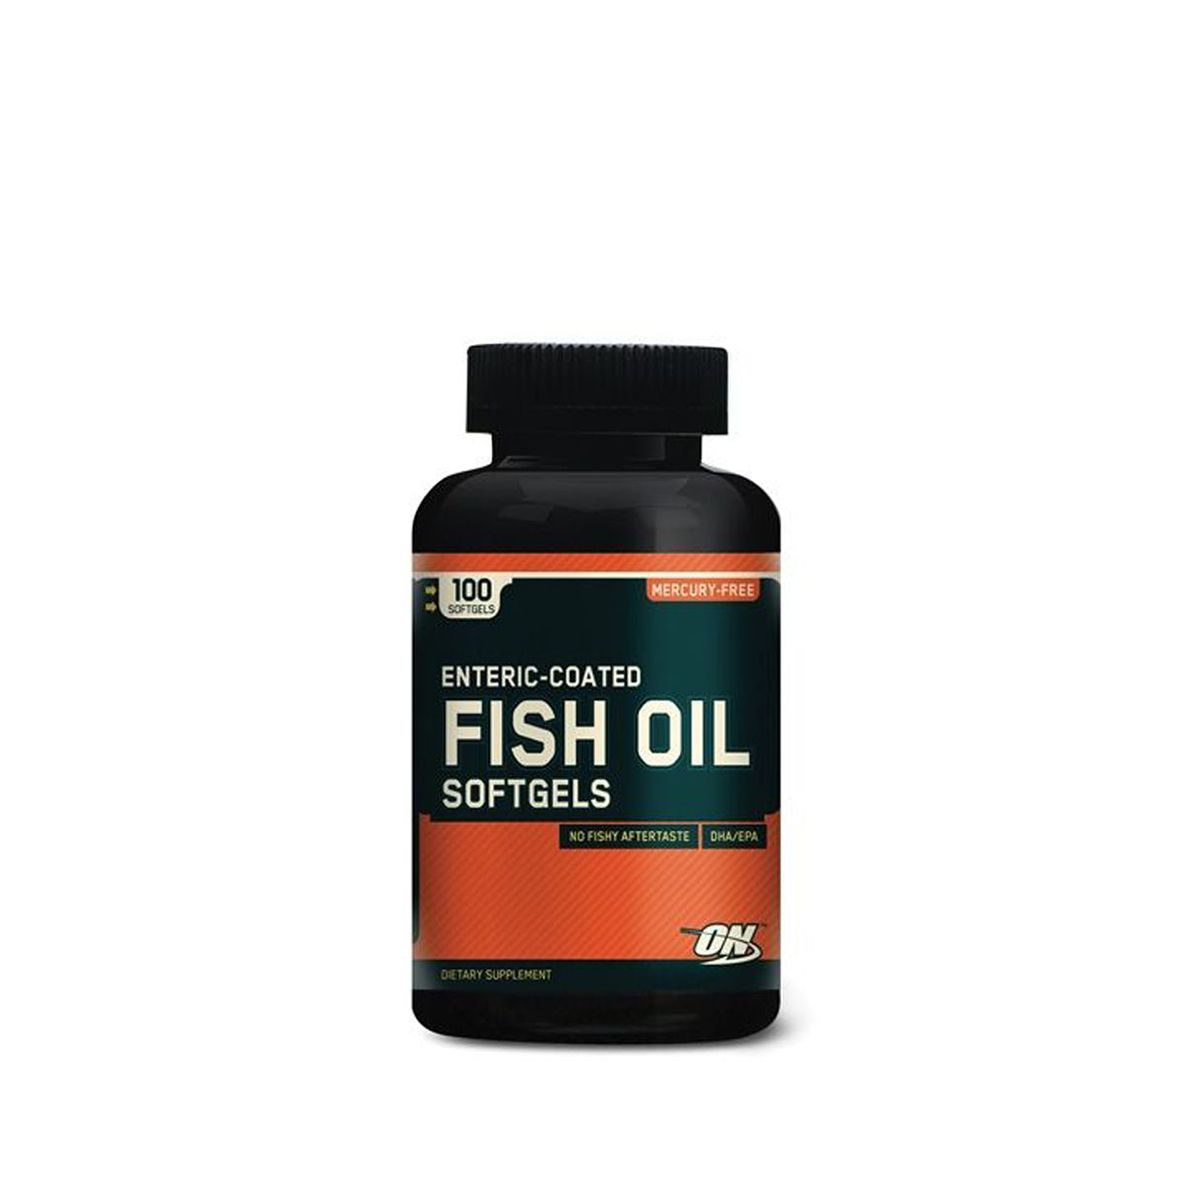 OPTIMUM NUTRITION - ENTERIC-COATED FISH OIL SOFTGELS - 100 KAPSZULA